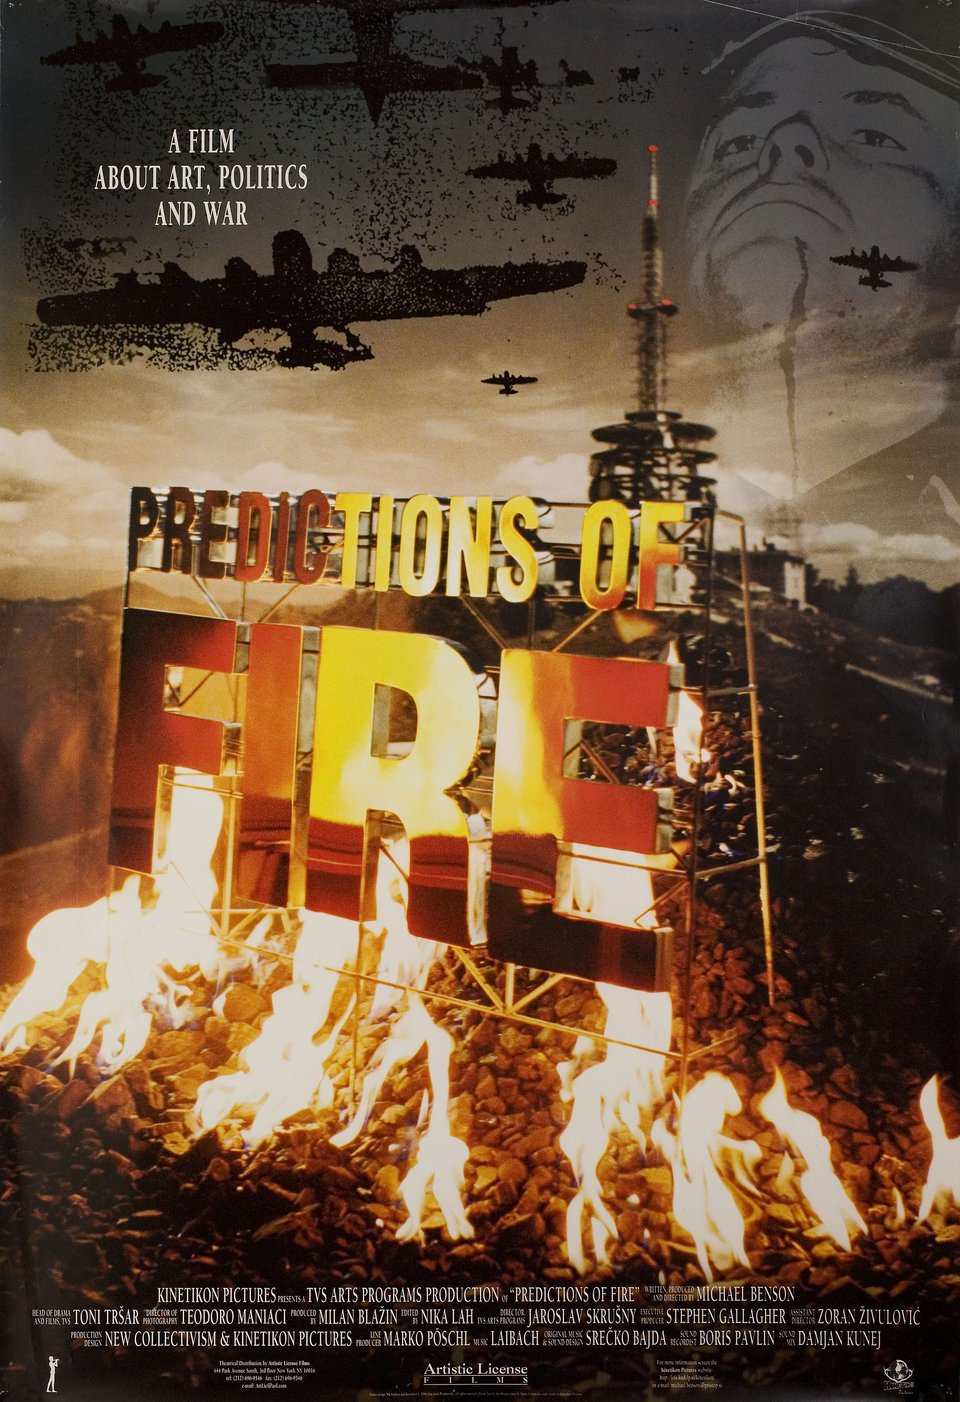 NSK: Predictions of Fire, Director Michael Benson